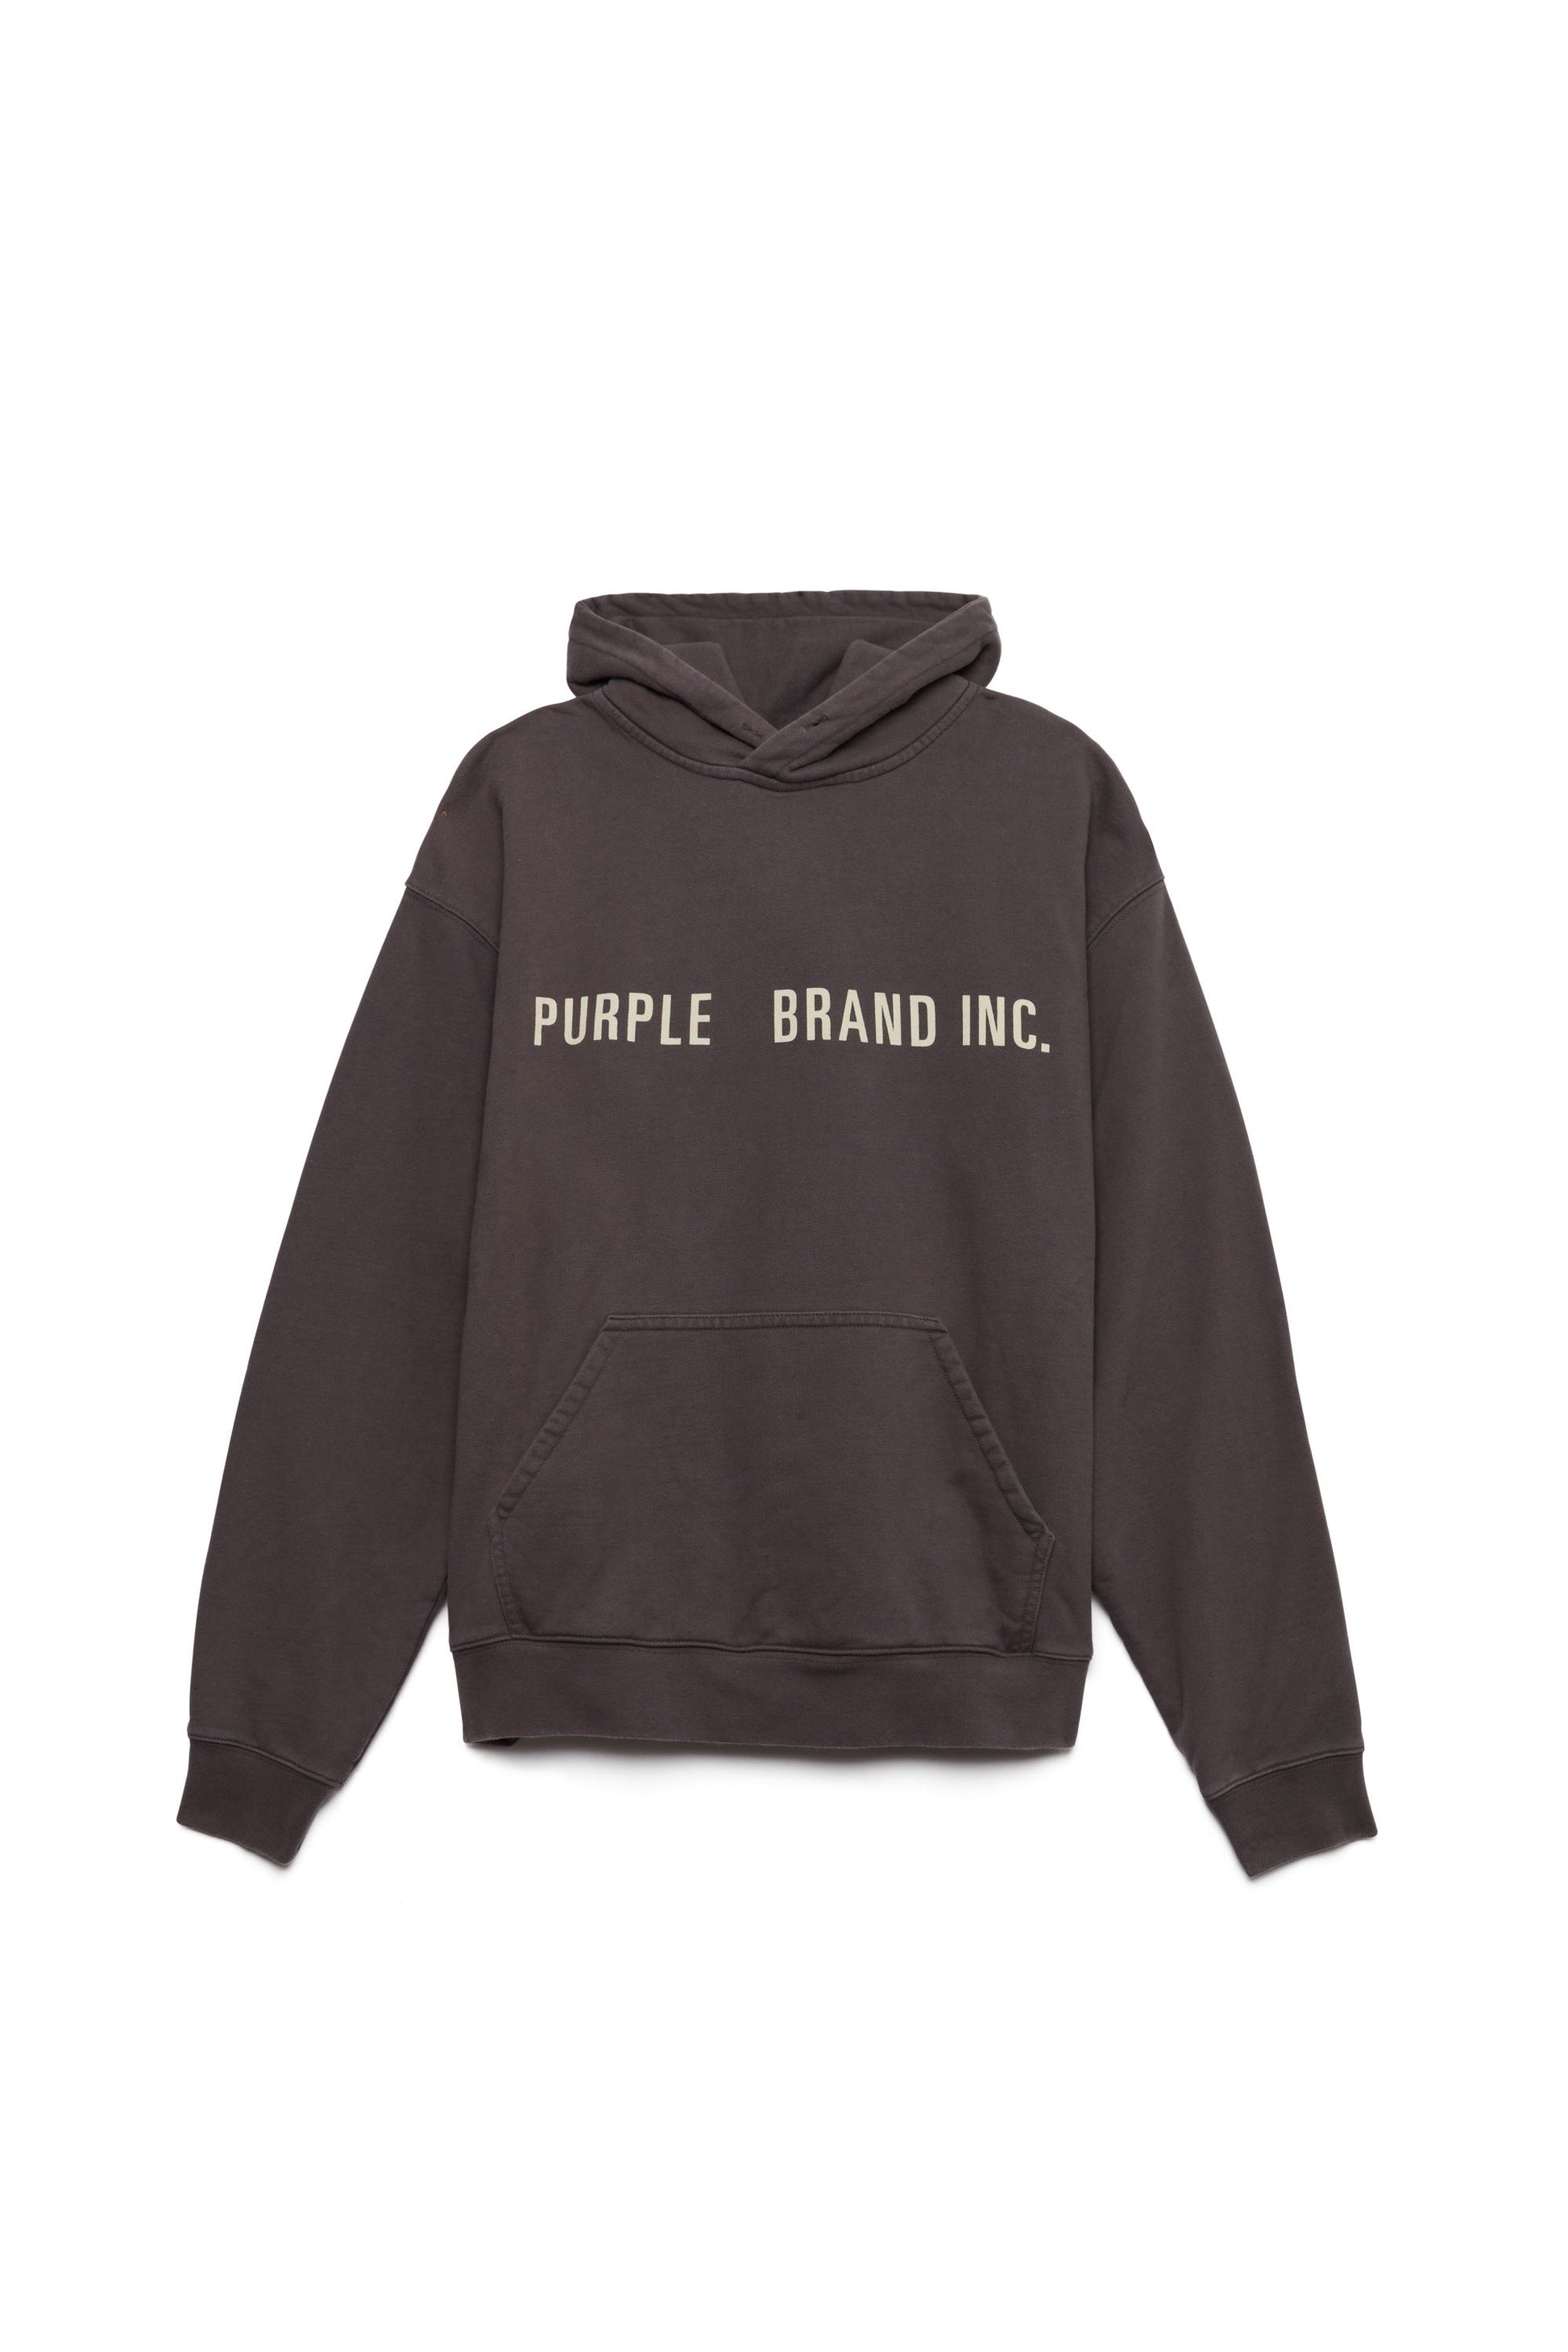 PURPLE BRAND - Men's Hoodie Sweatshirt - Style No. P404 - Artifact Embroidered Hoodie Charcoal - Front